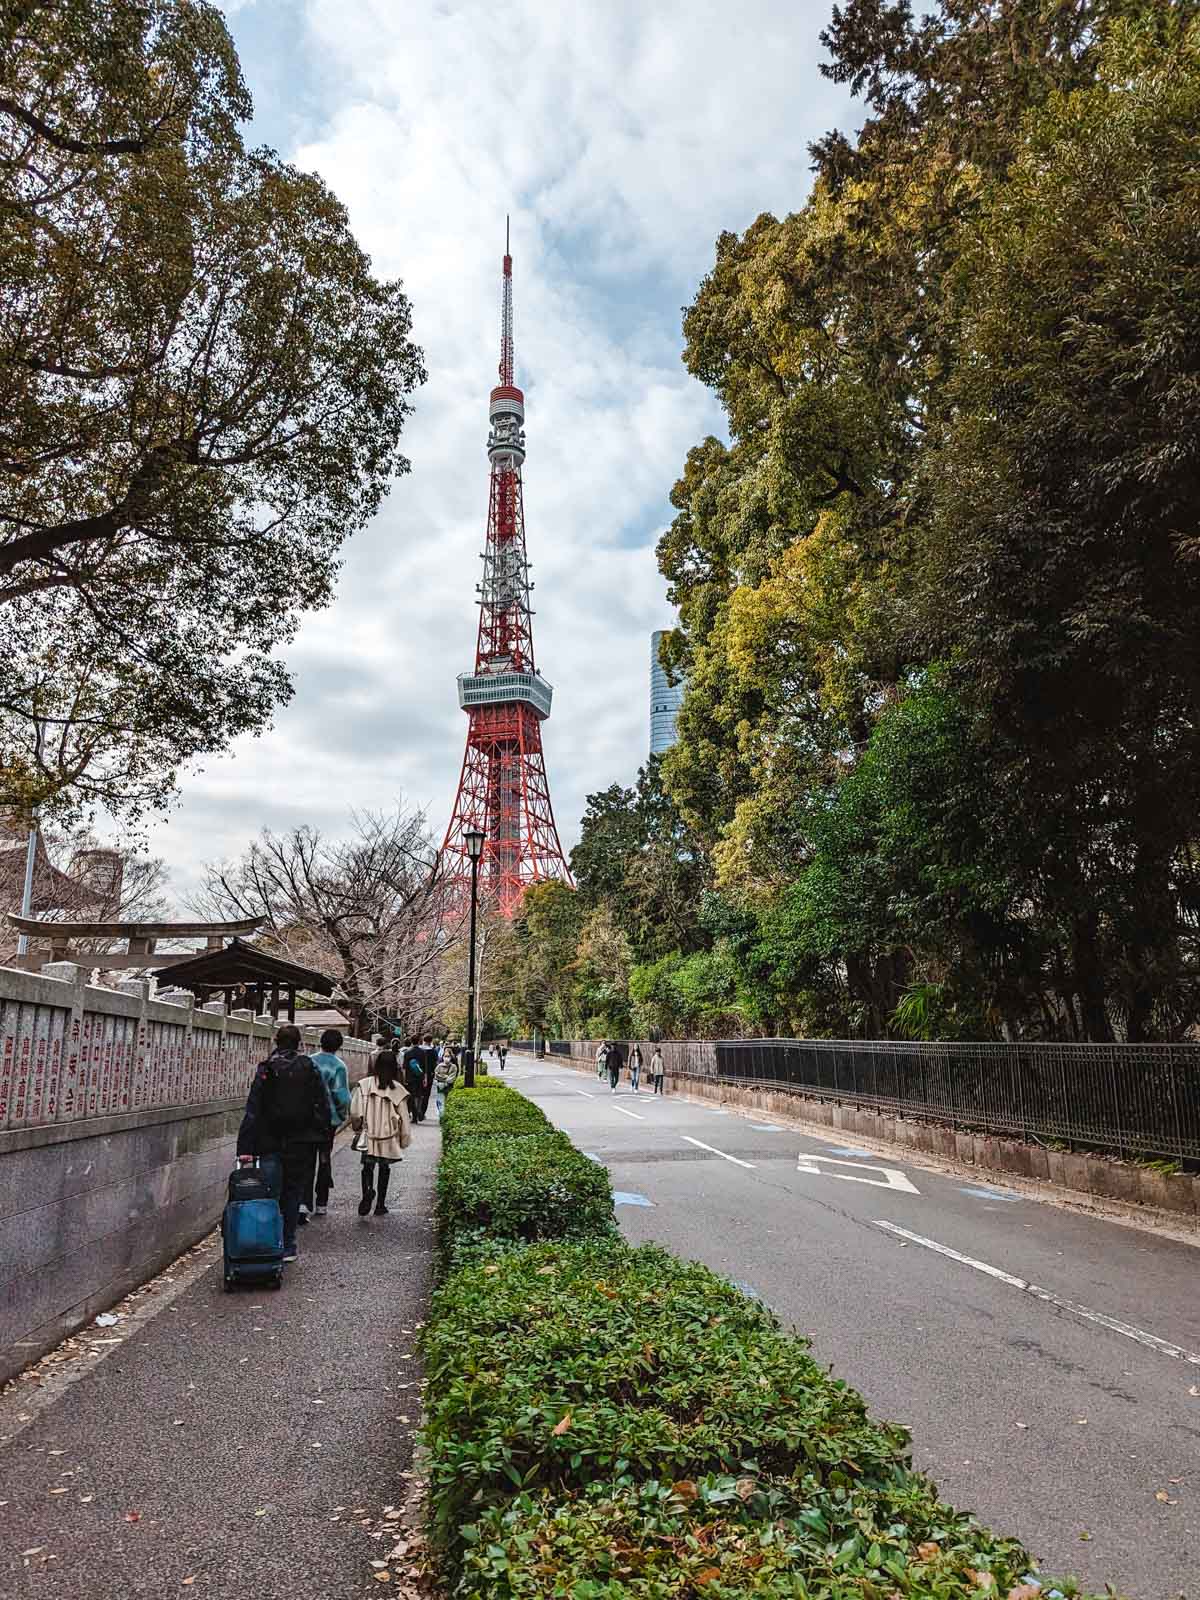 Pedestrians walking down sidewalk along street that leads to Tokyo Tower in distance.